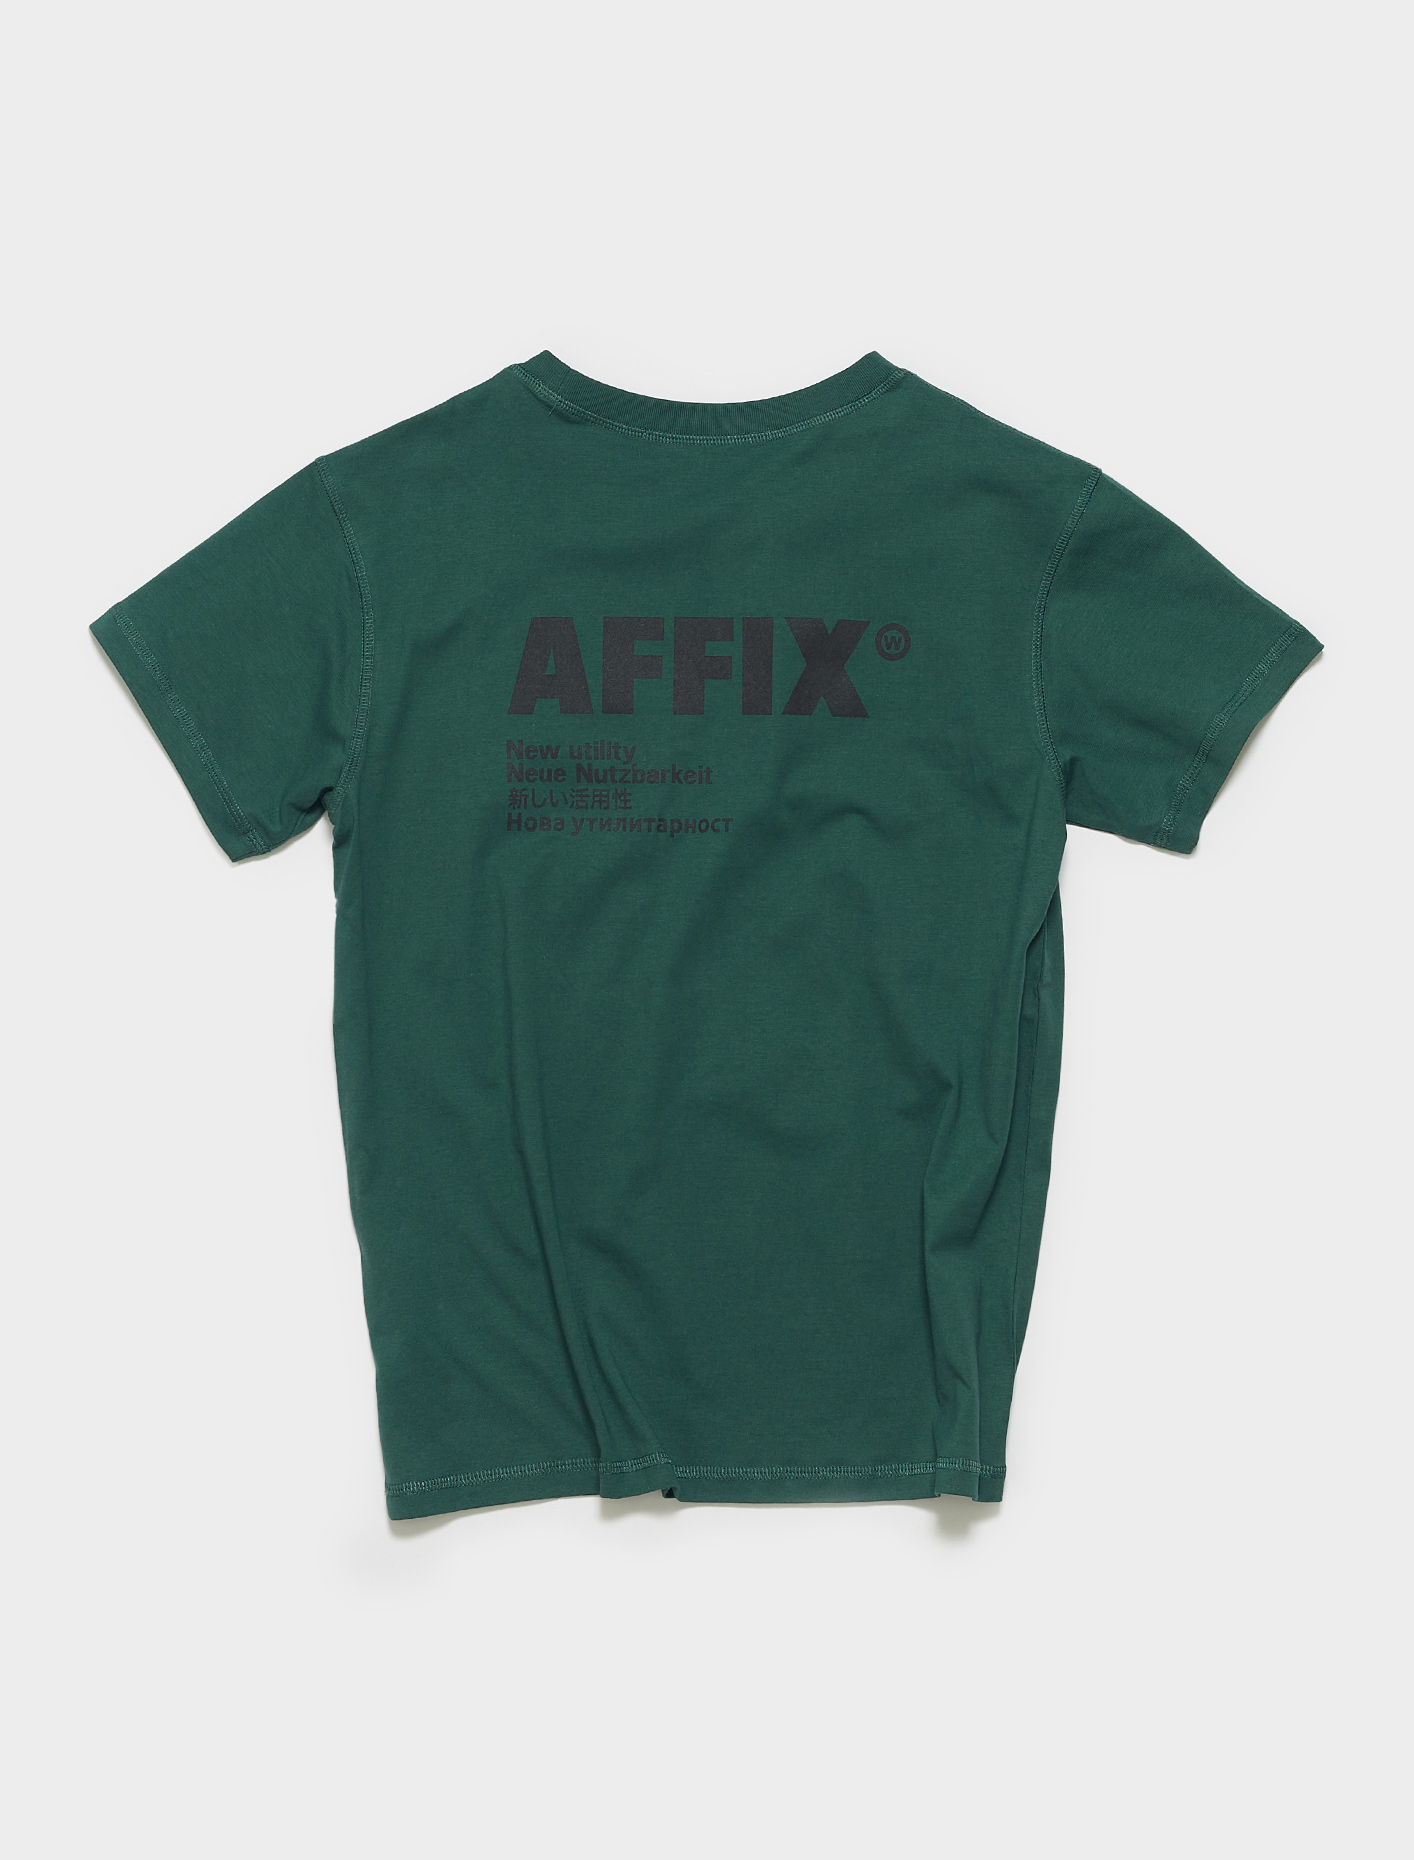 Affix Standardised Logo T-Shirt in Deep Green | Voo Store Berlin ...